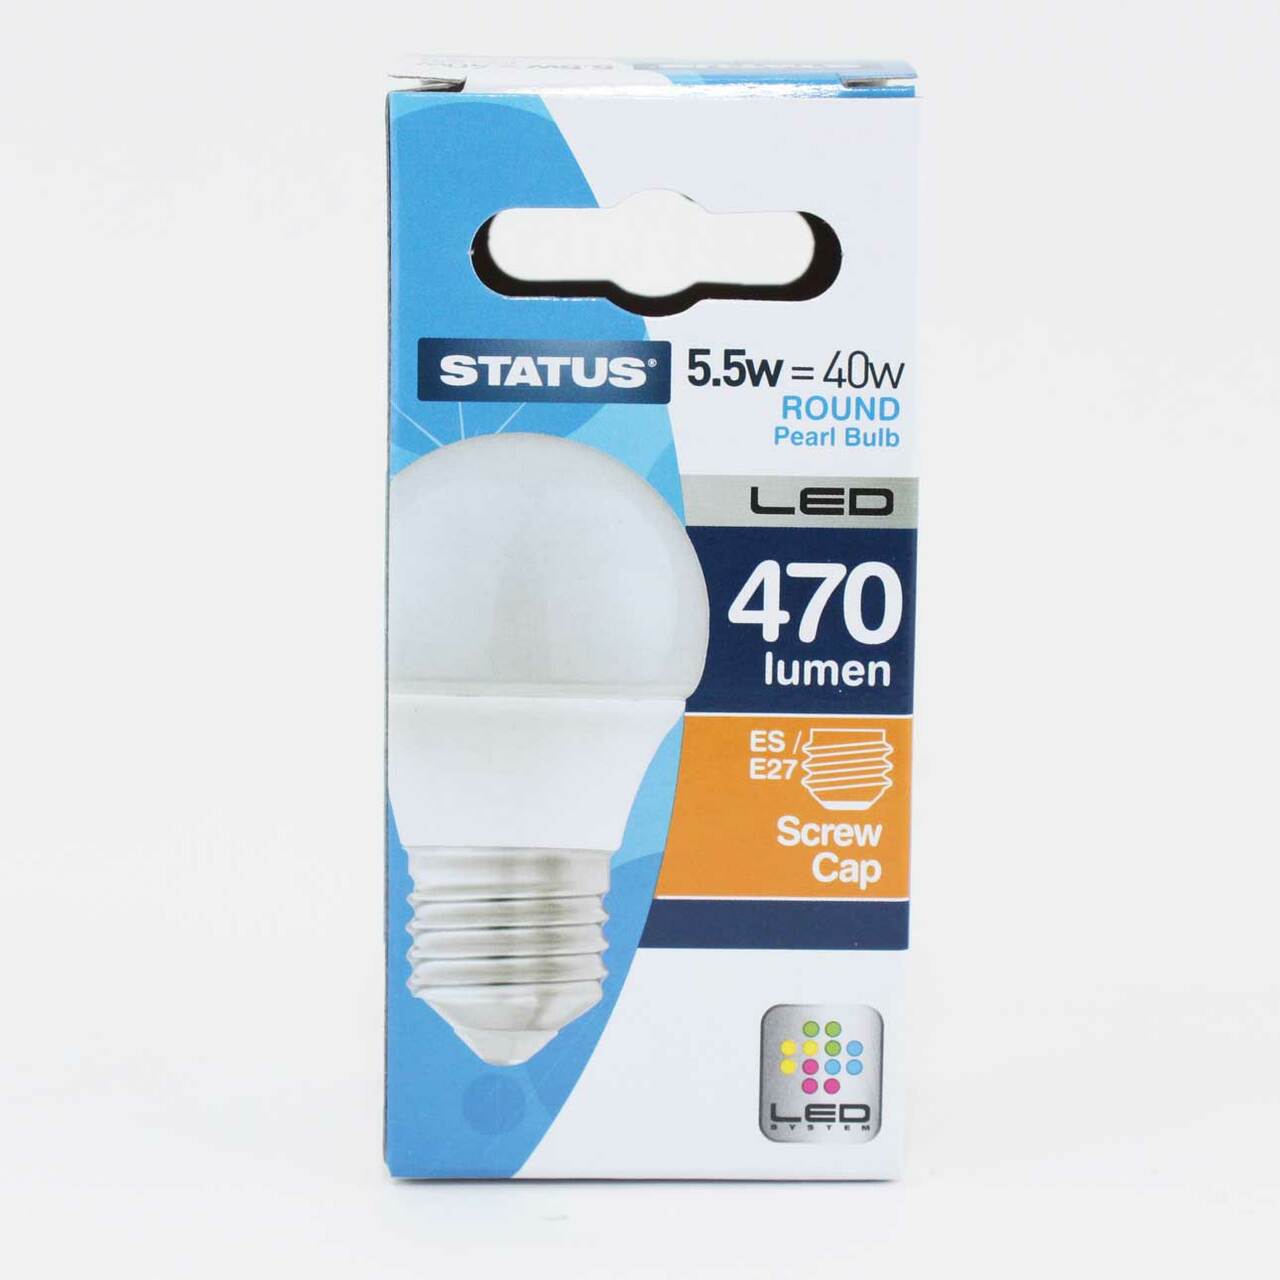 Status Round 5.5W LED 470 Lumen Warm White Bulb